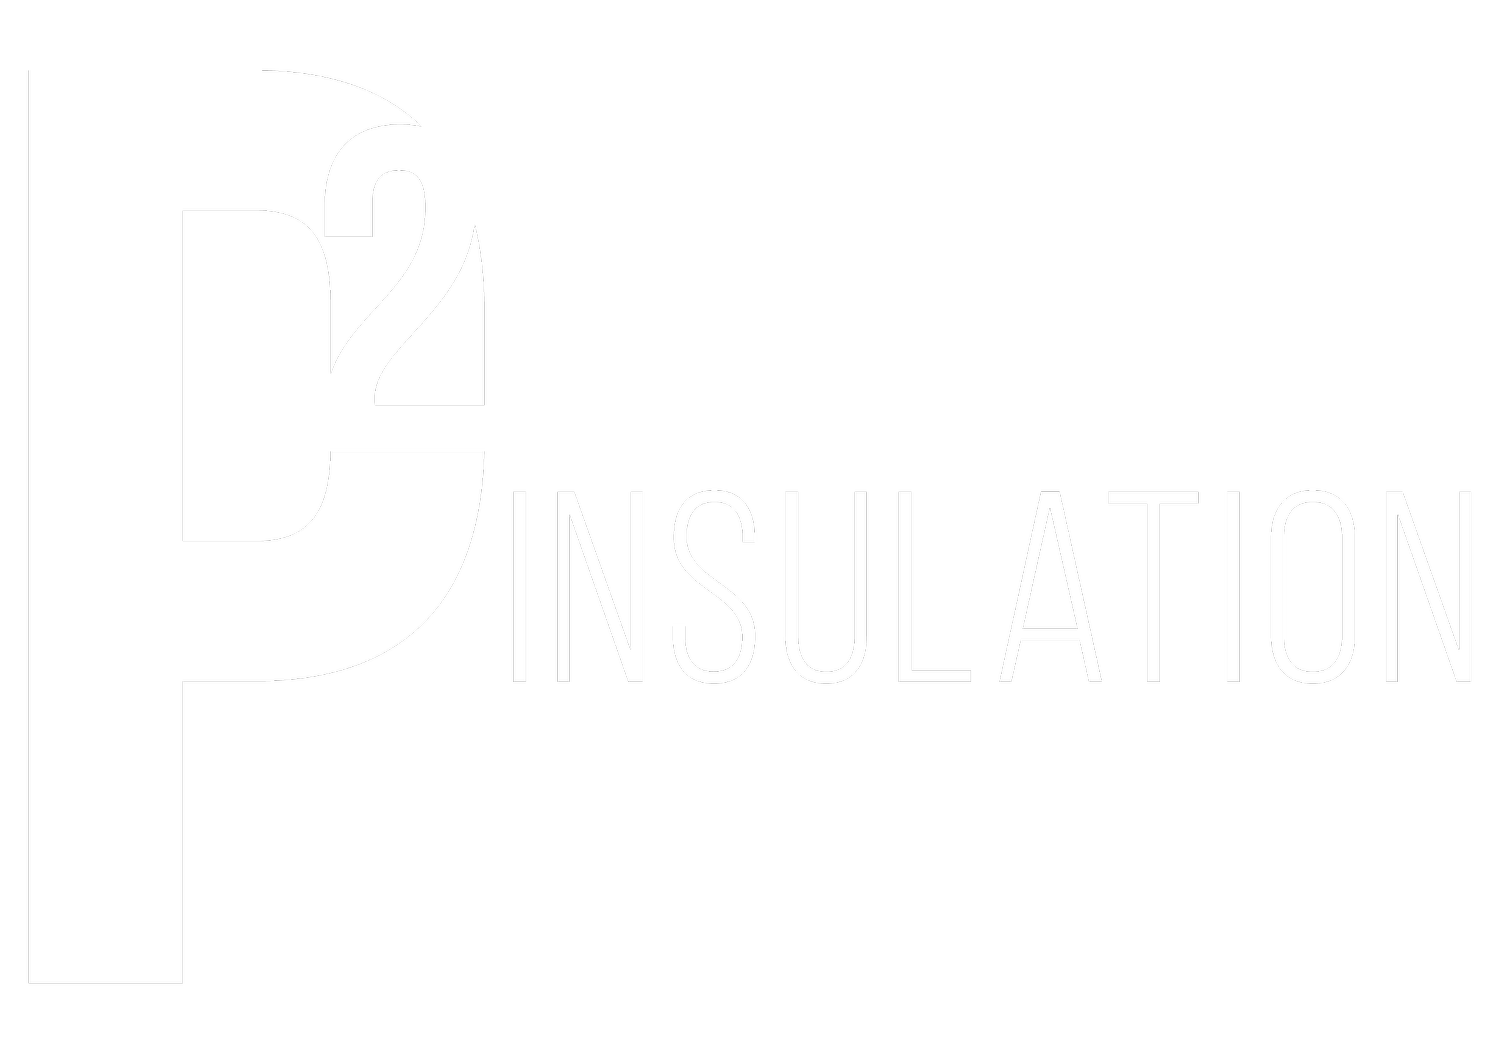 P2 Insulation